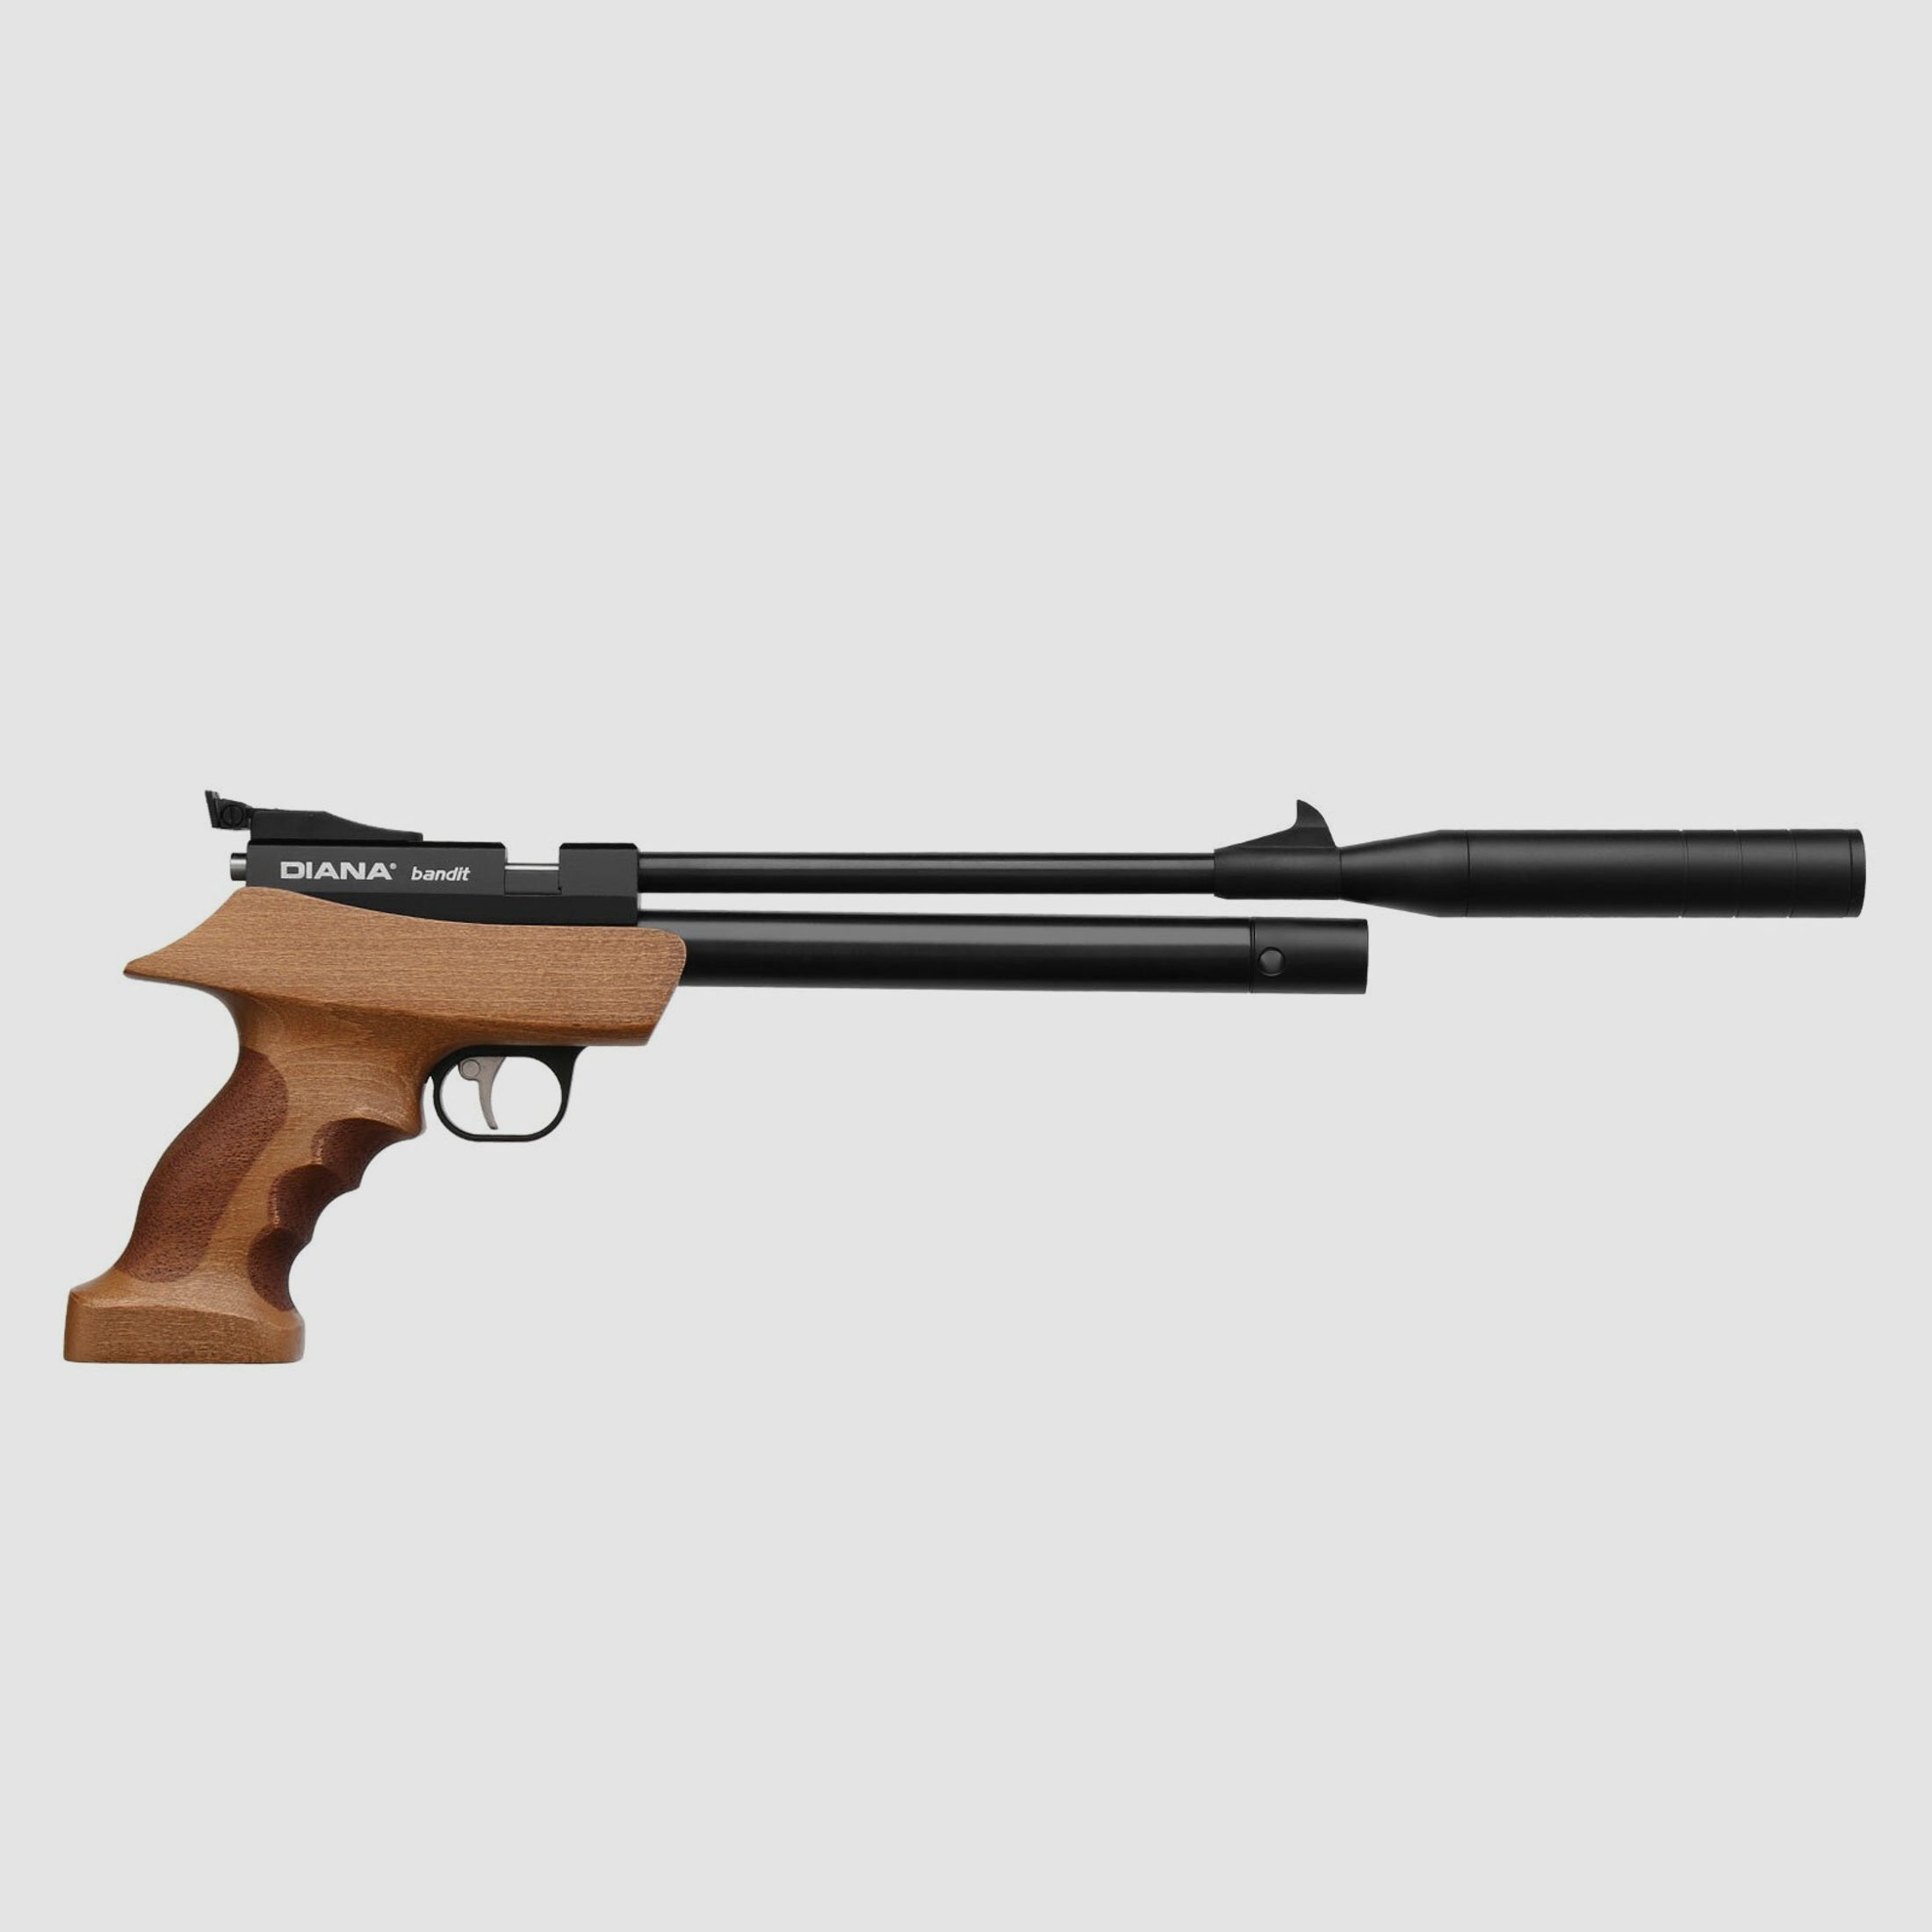 Diana Bandit Pressluftpistole Kaliber 4,5 mm Diabolo (P18)